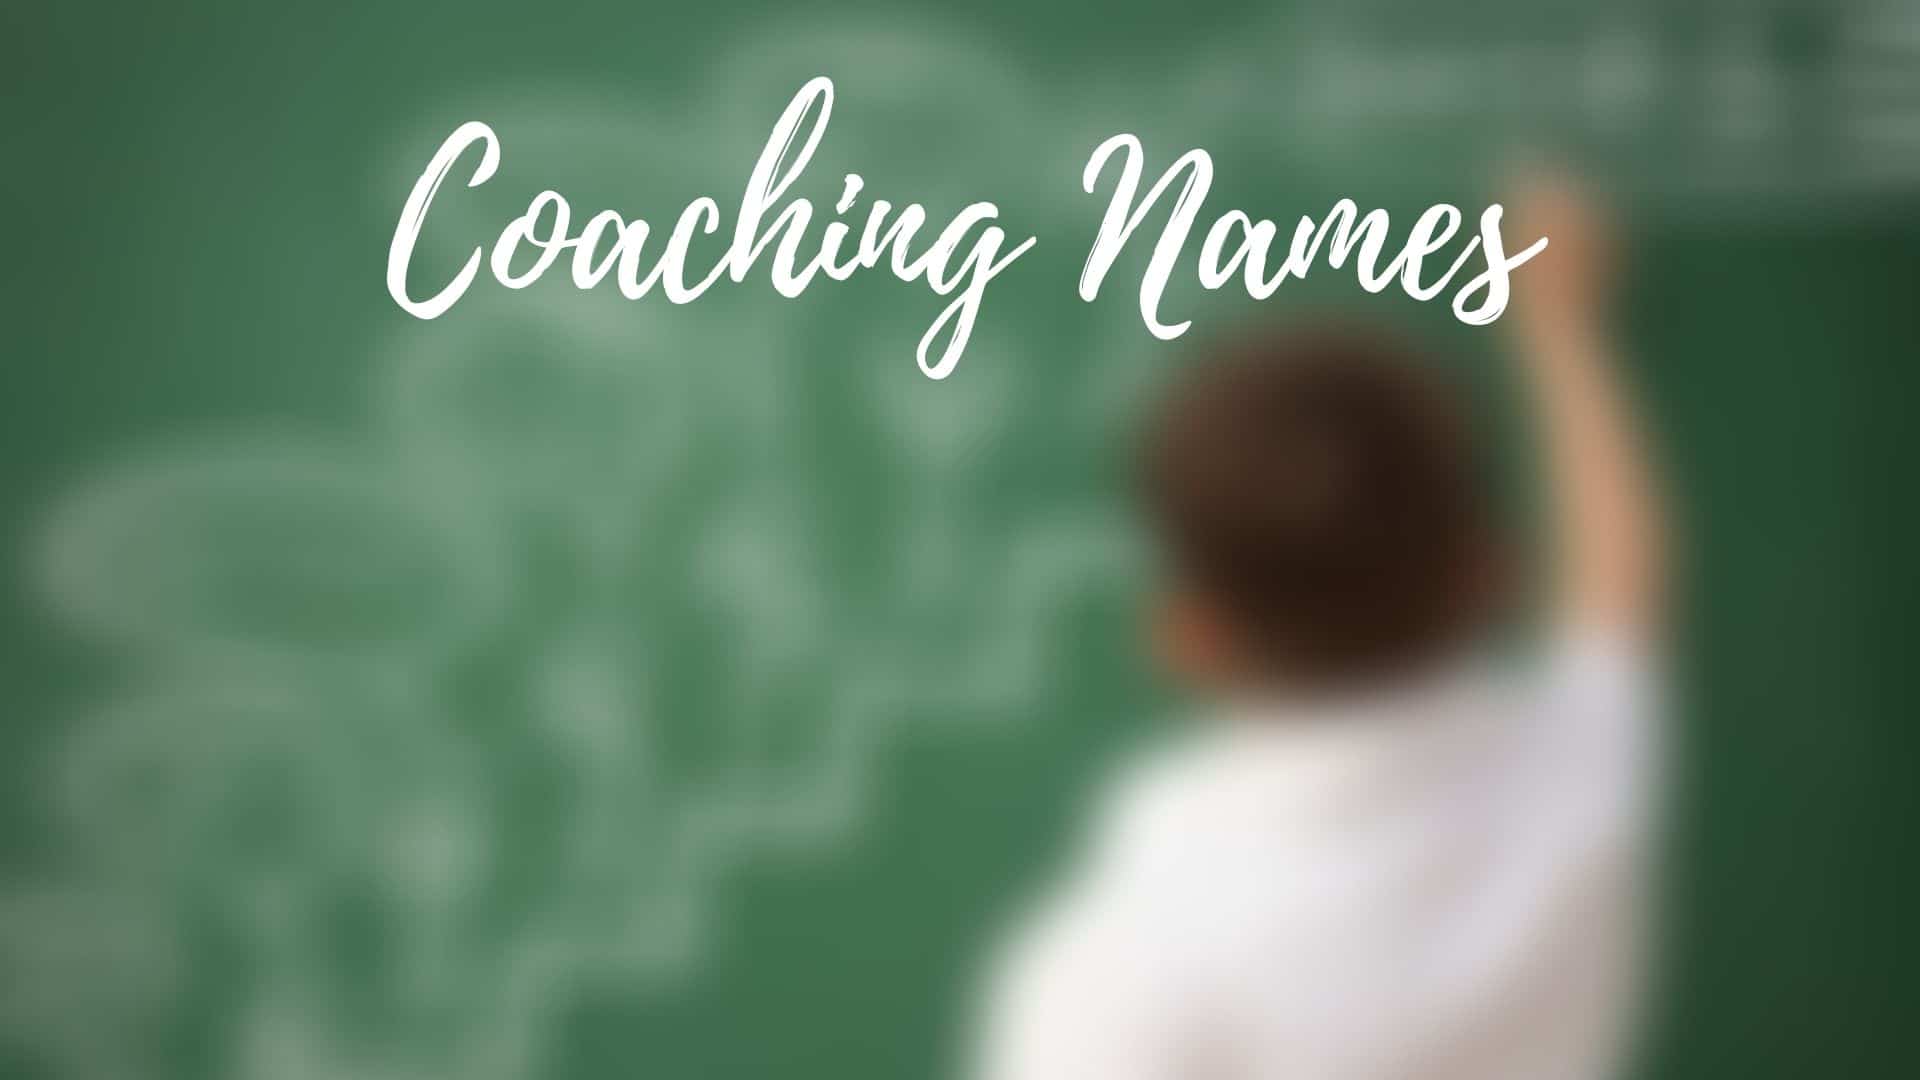 Coaching Name